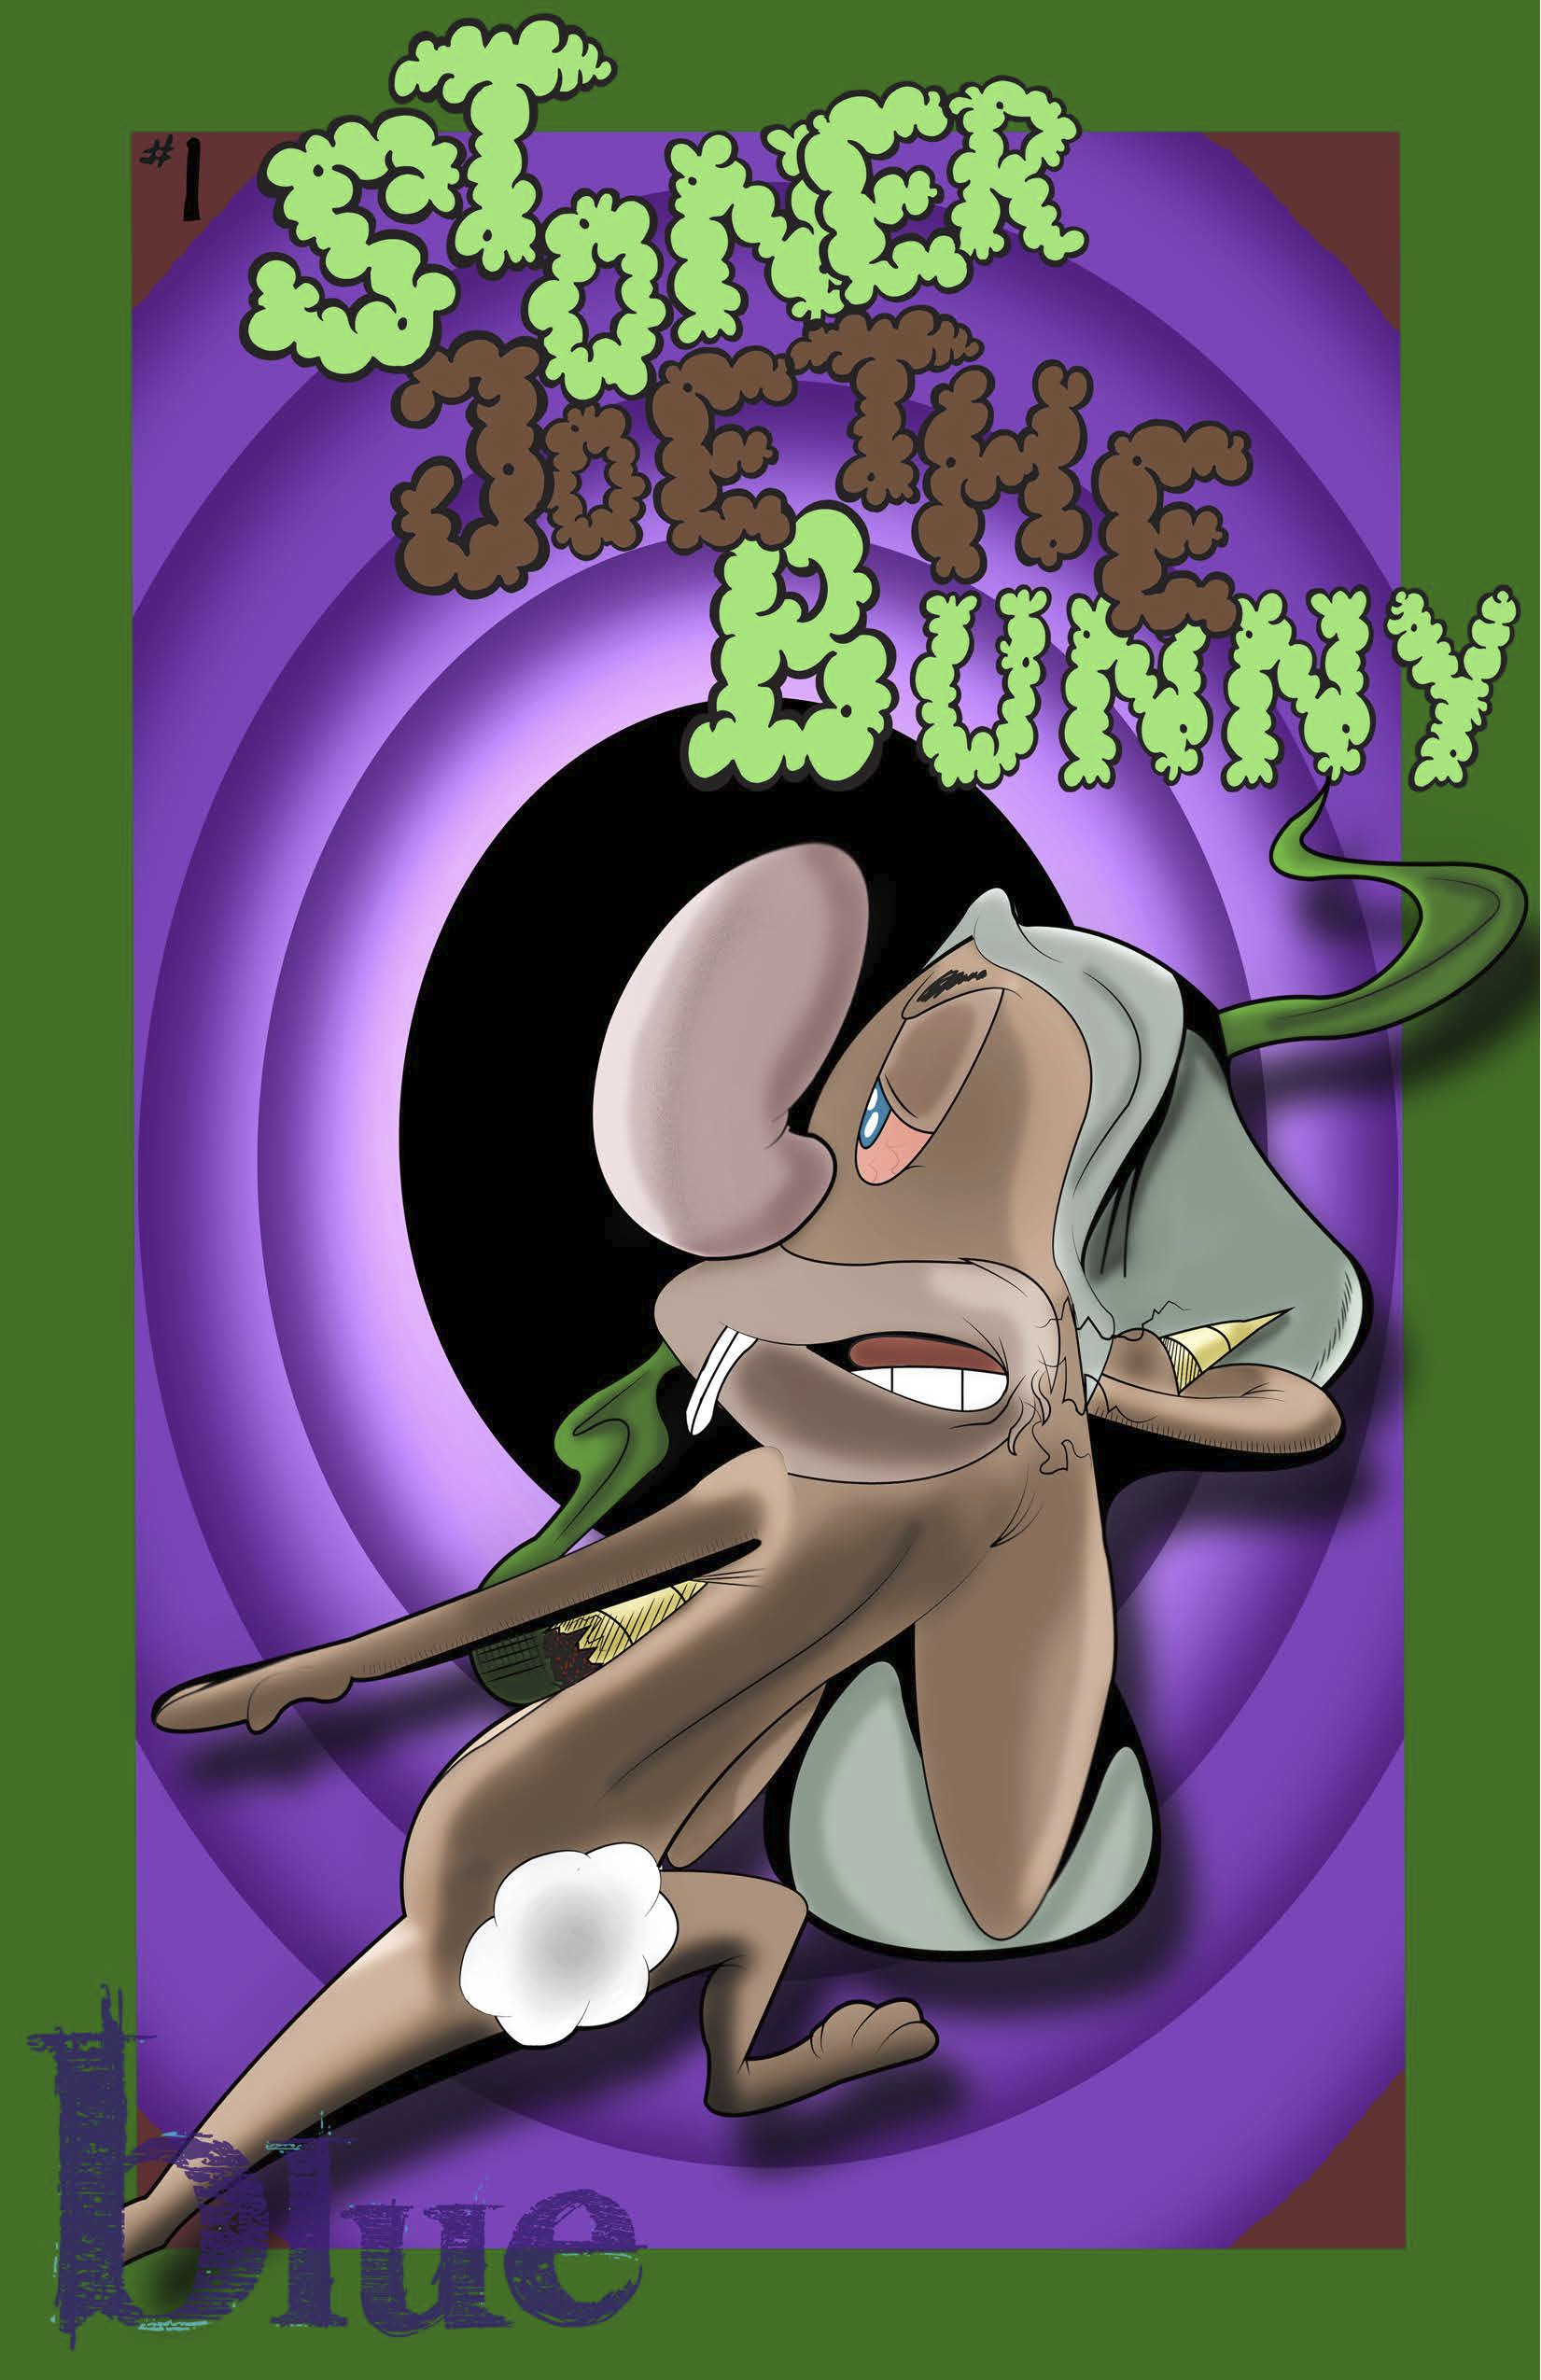 Stoner Joe the Bunny Comic Book Cover